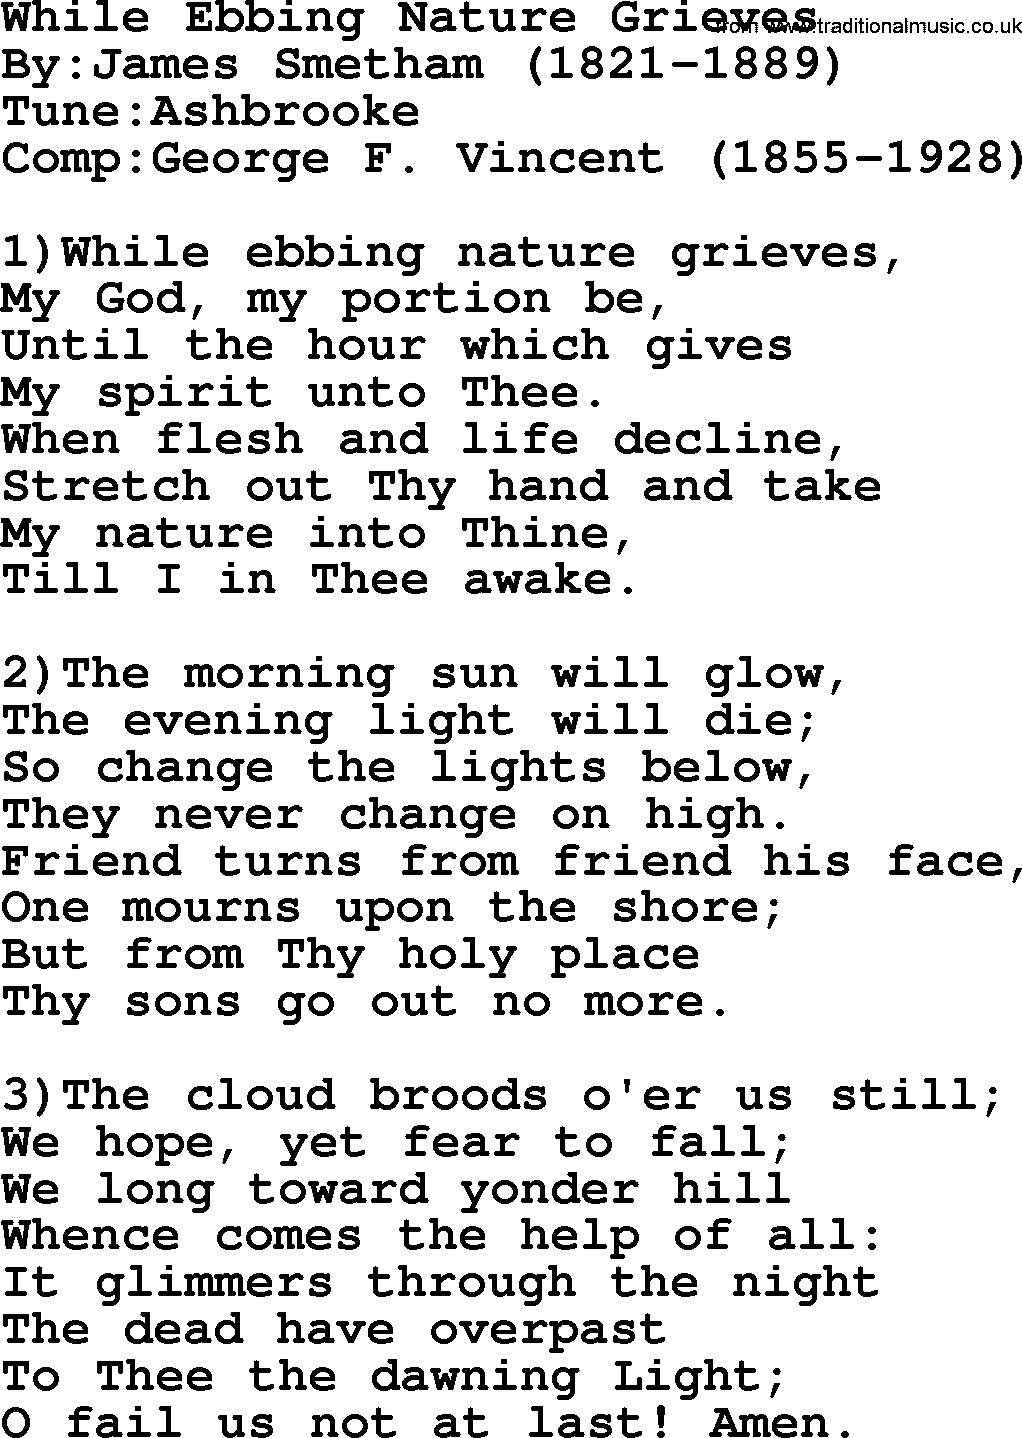 Methodist Hymn: While Ebbing Nature Grieves, lyrics